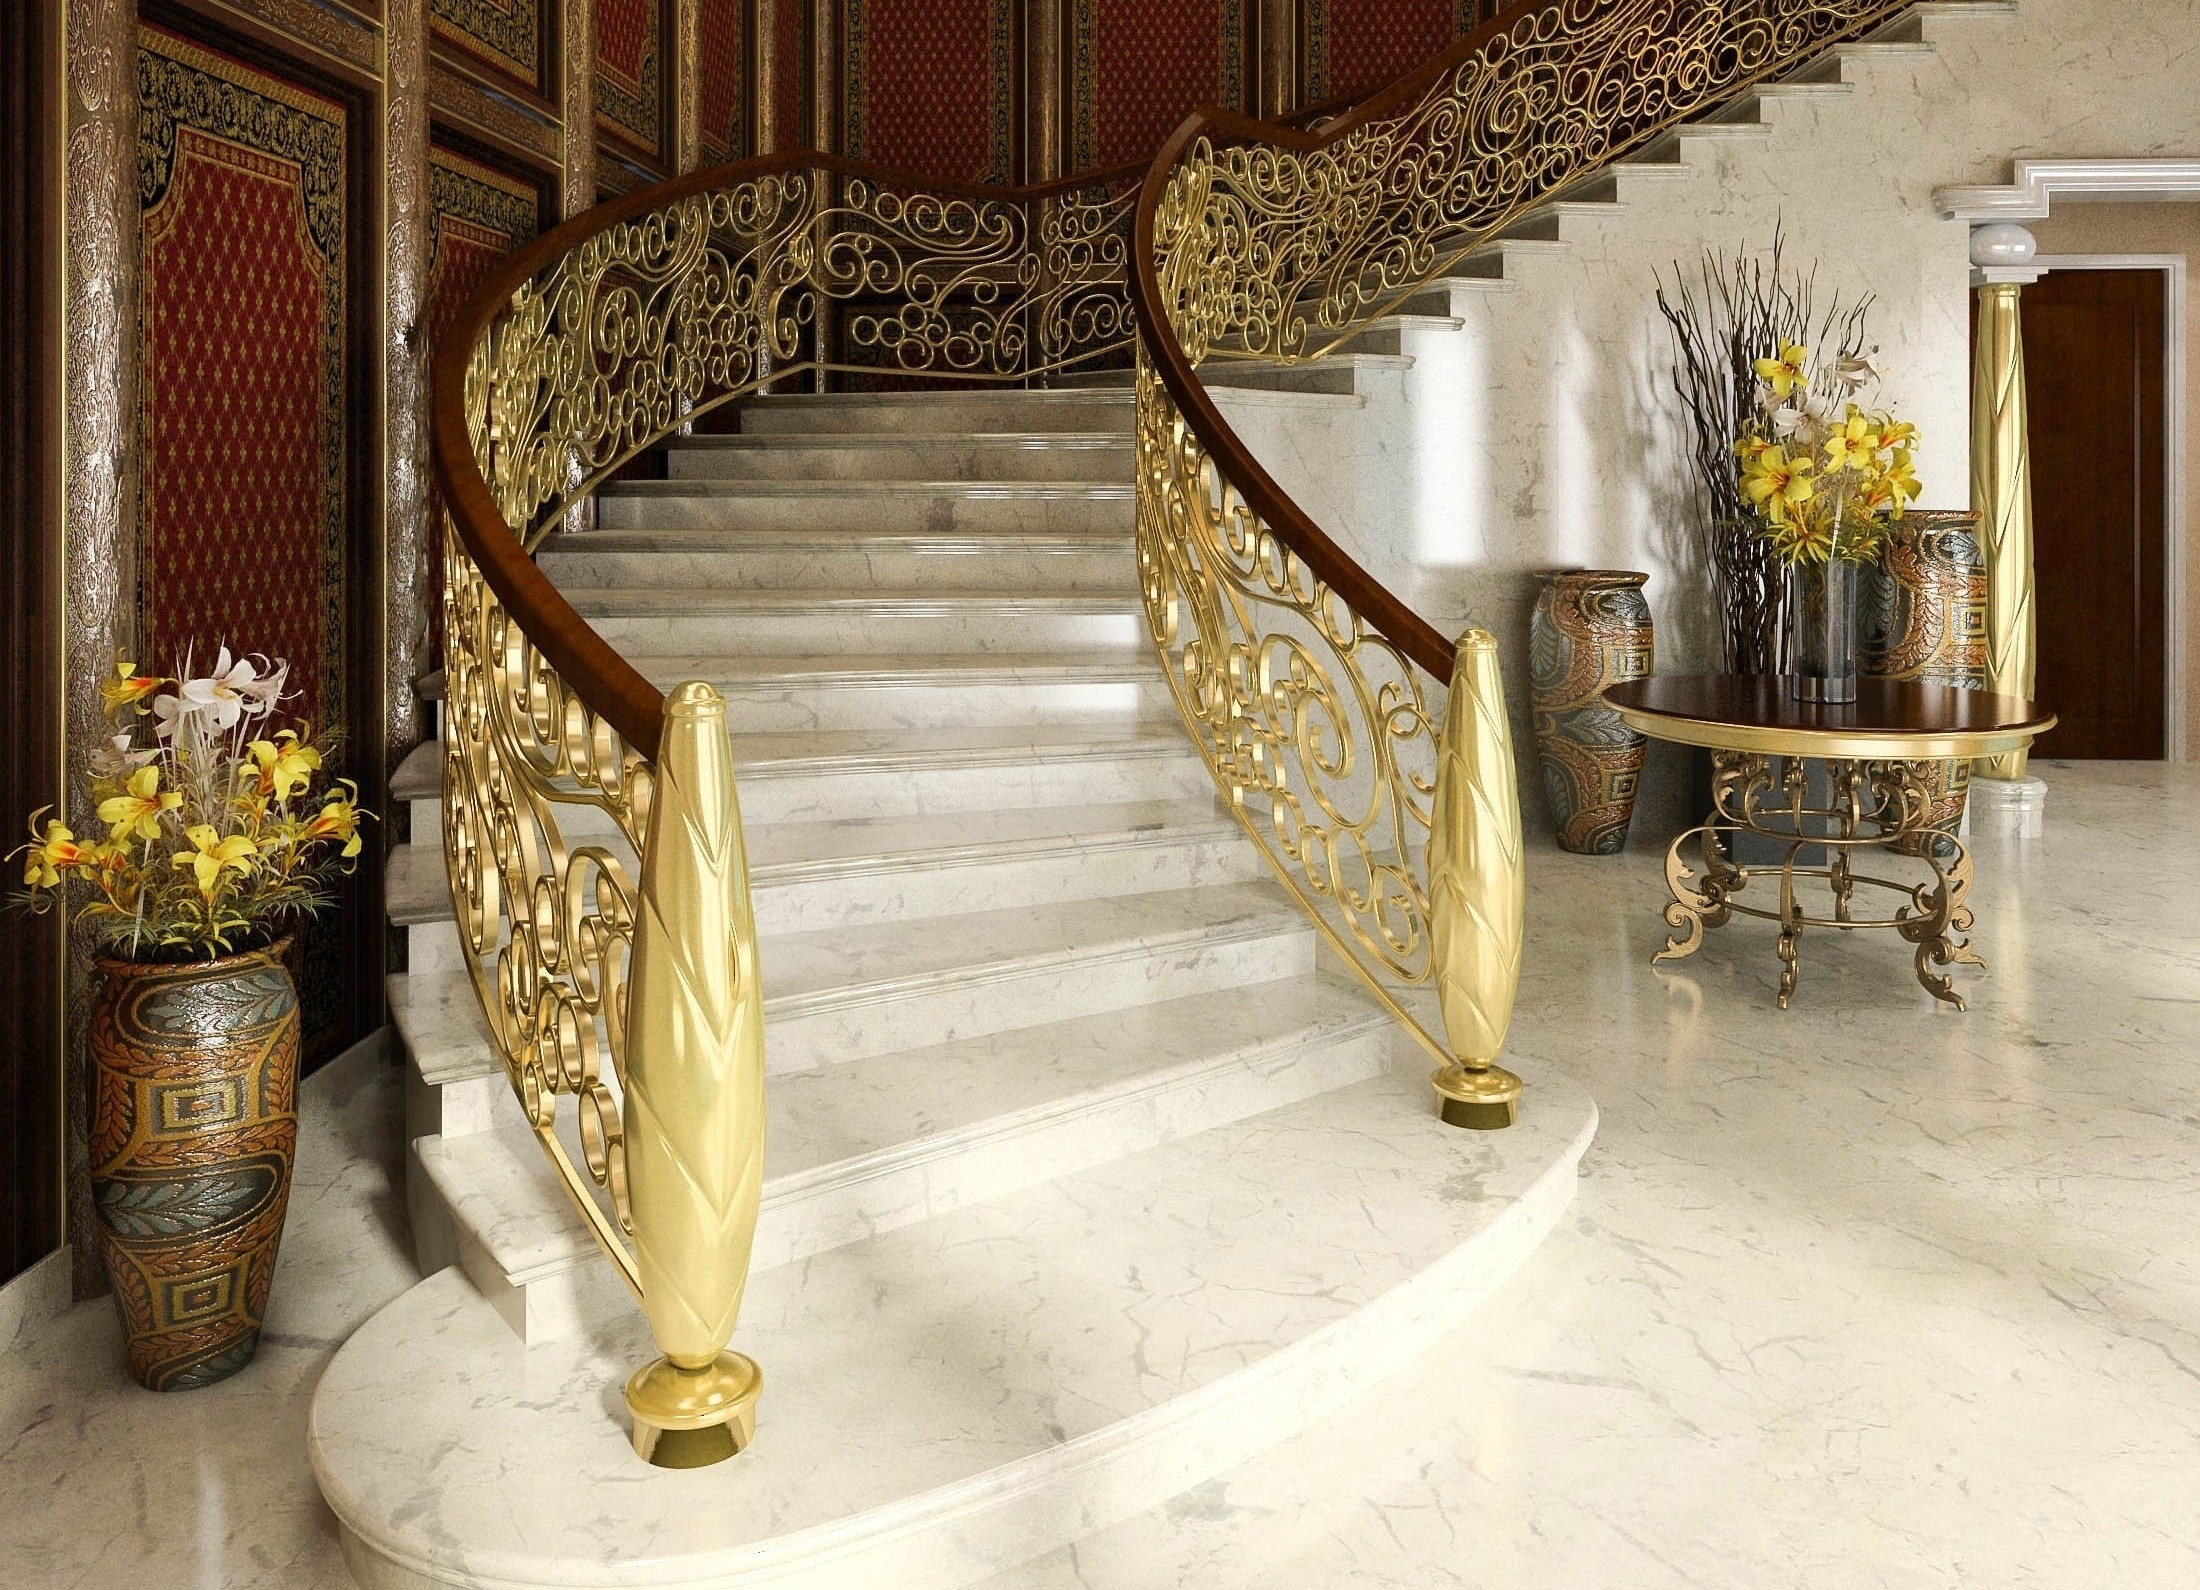 stairs, ladder, design, flowers, interior, miscellanea, miscellaneous, vase, door, handrails